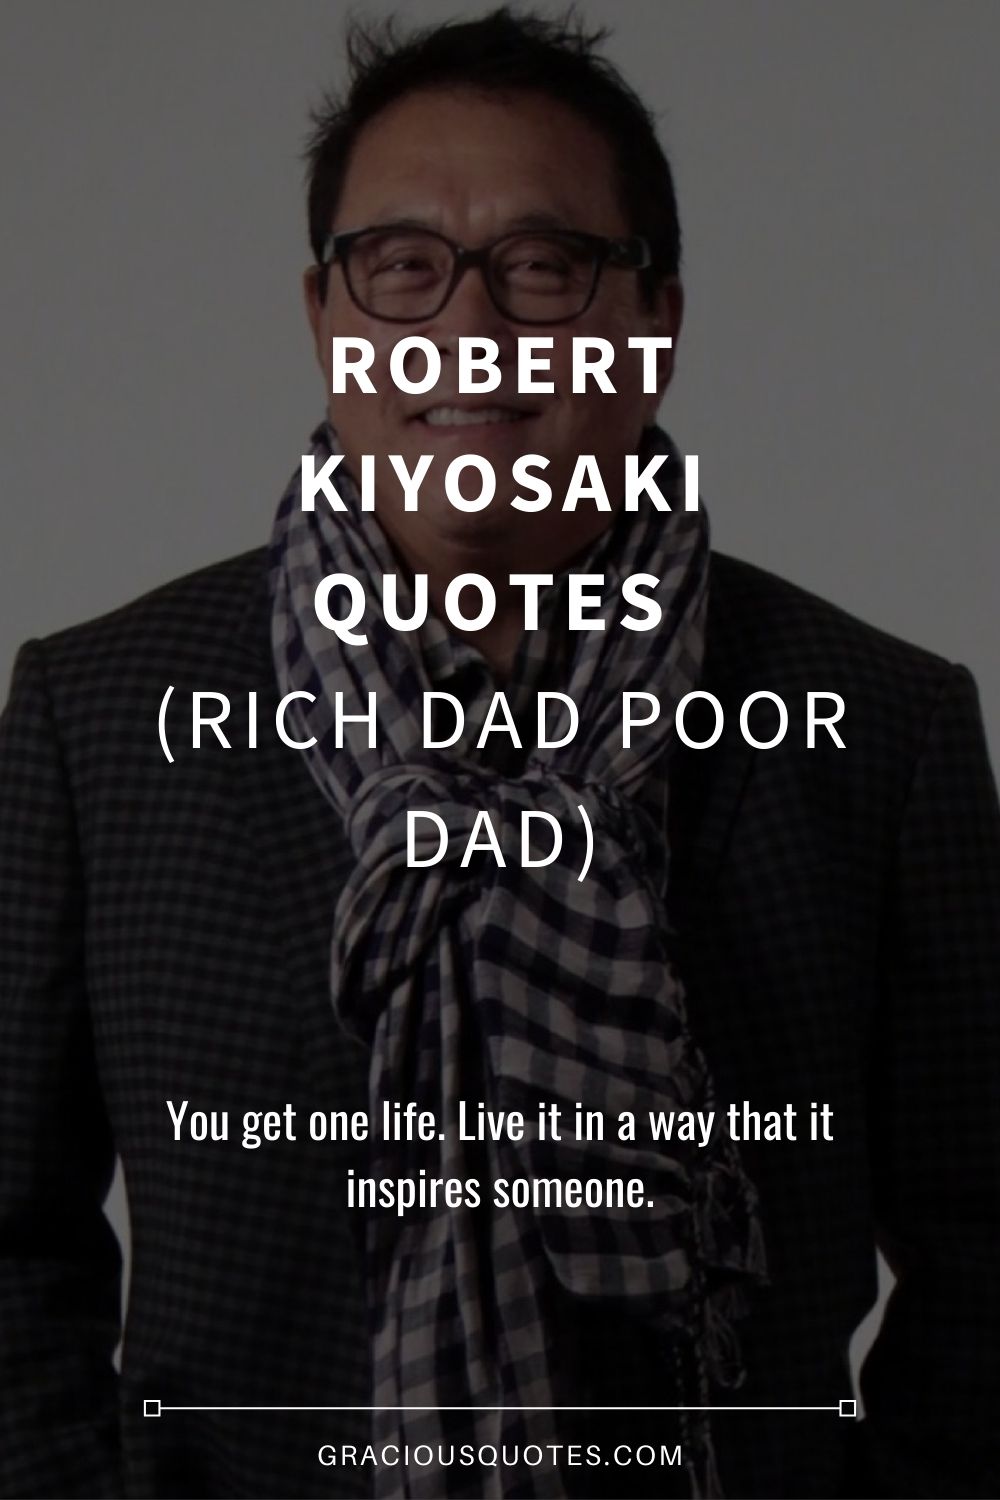 Robert Kiyosaki Quotes (RICH DAD POOR DAD) - Gracious Quotes